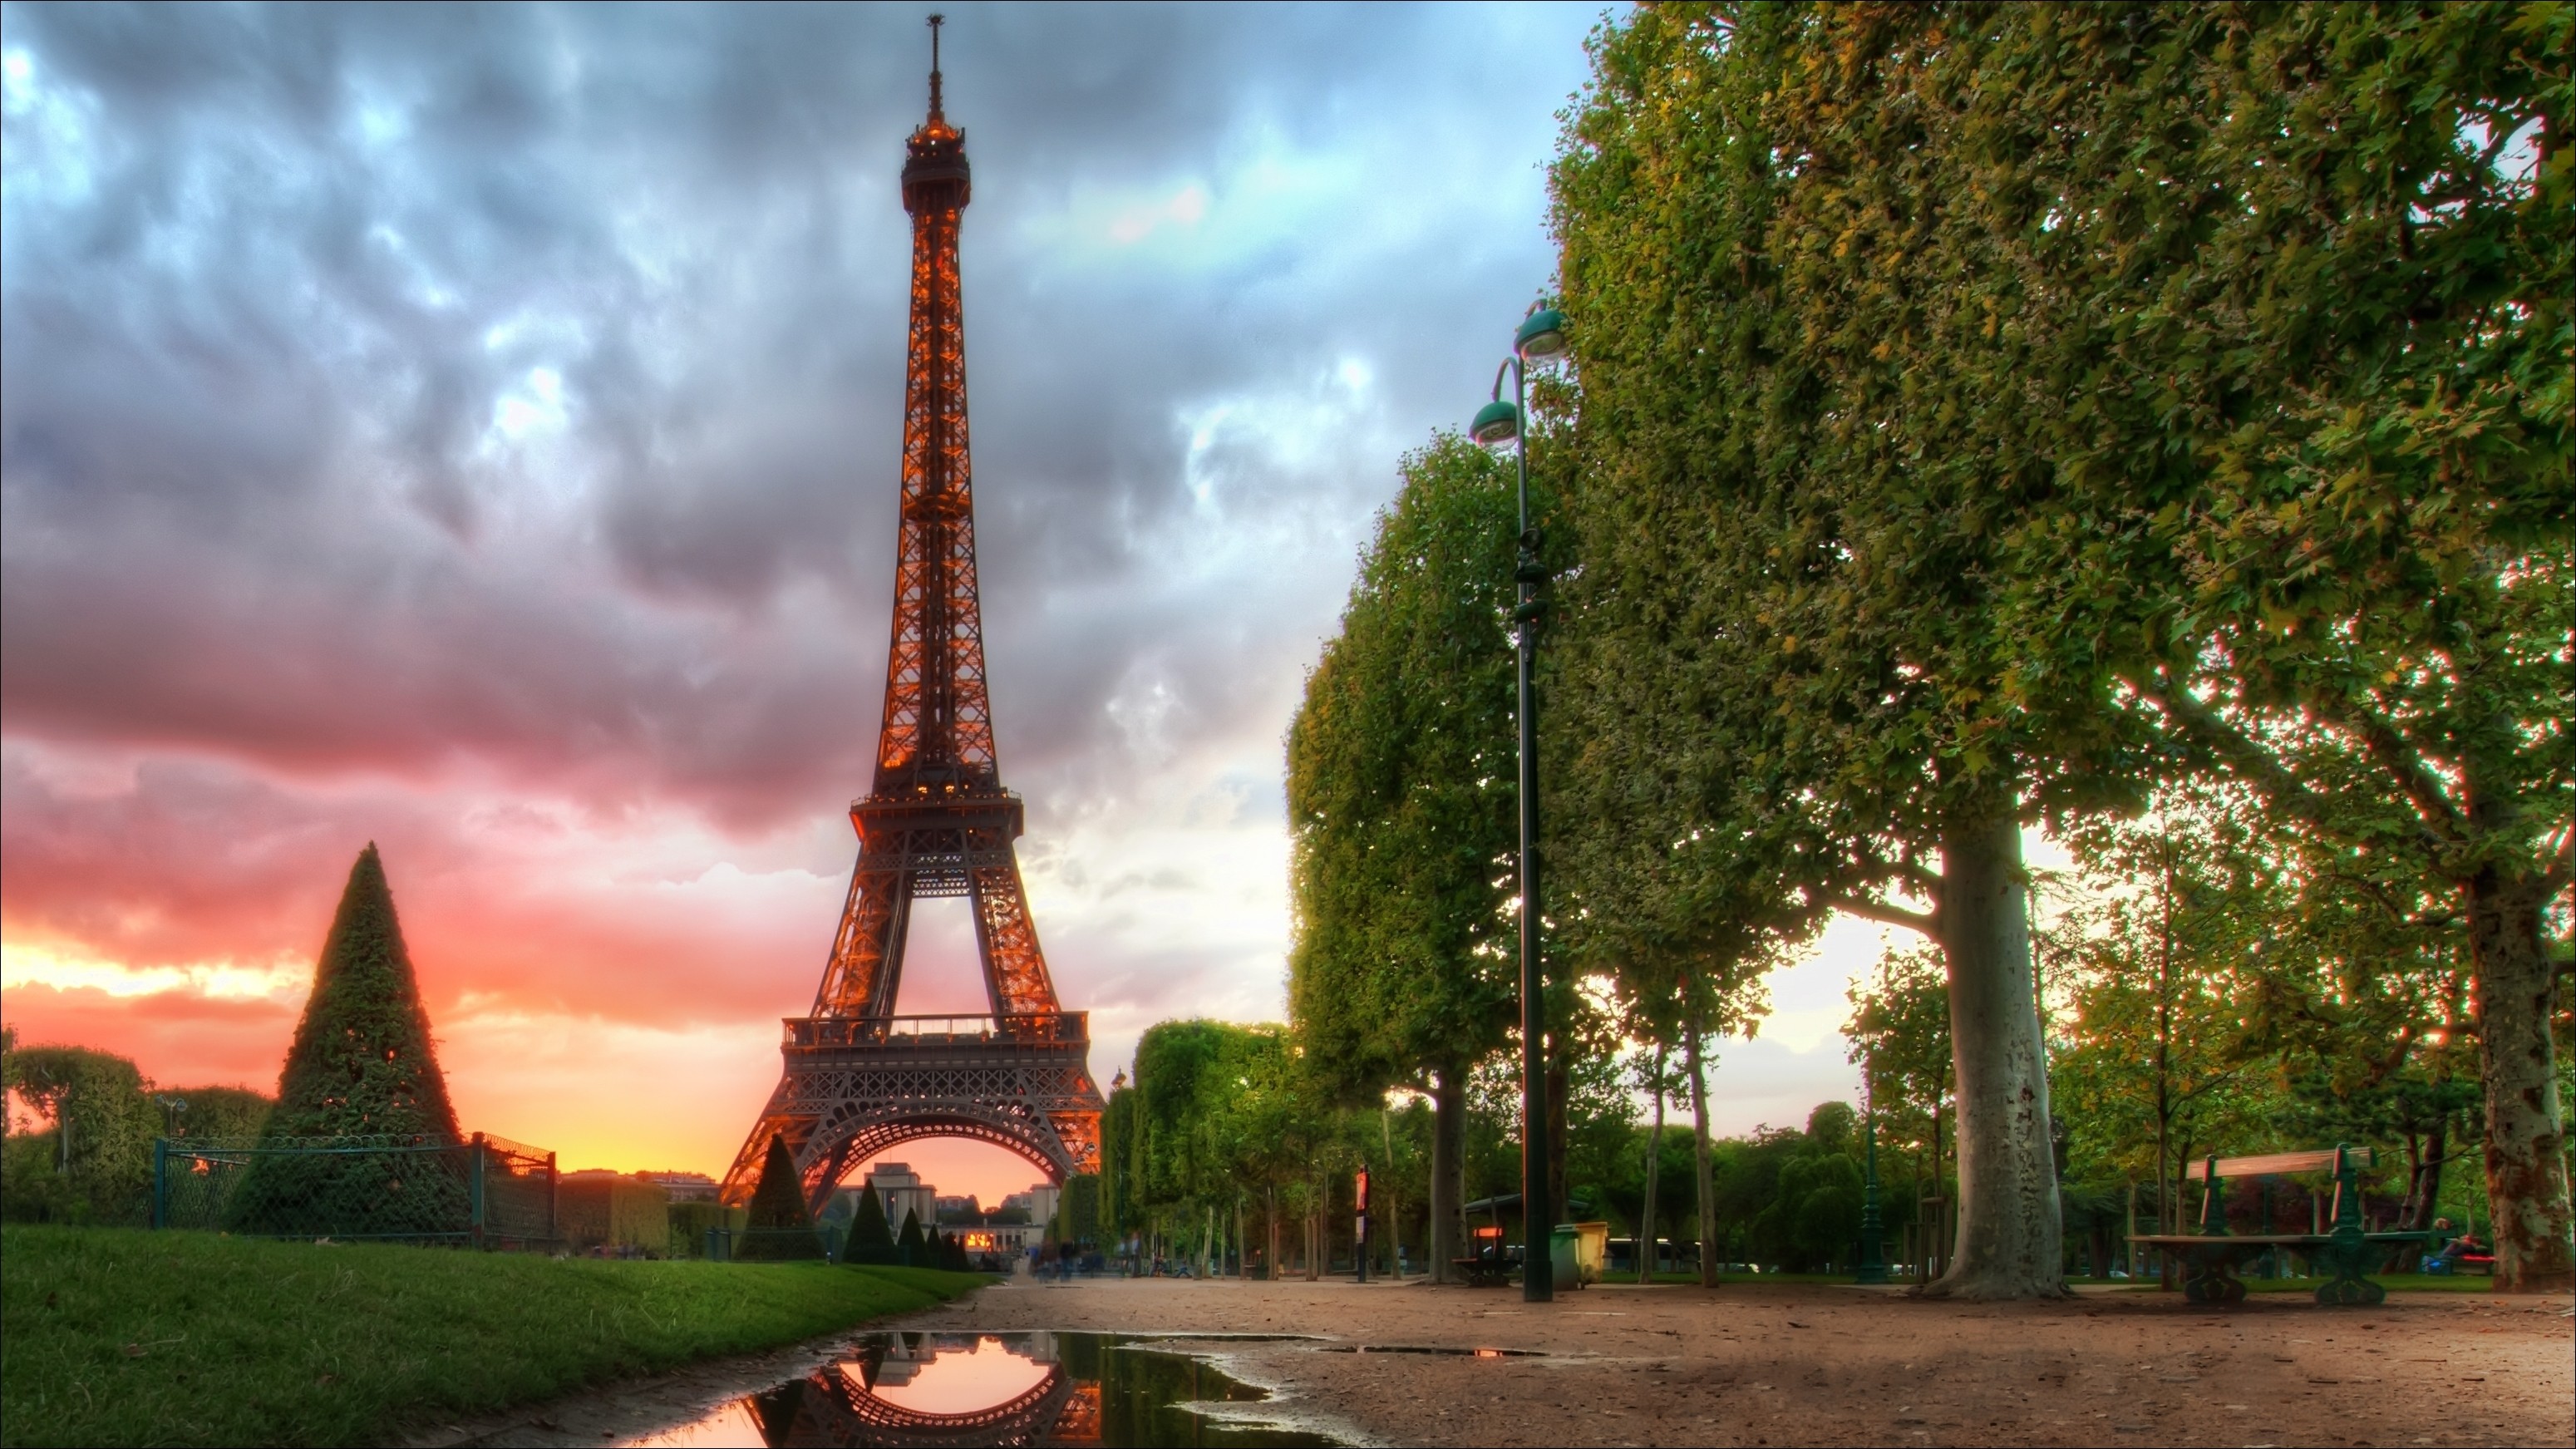 General 3099x1743 Eiffel Tower Paris France trees city landmark Europe